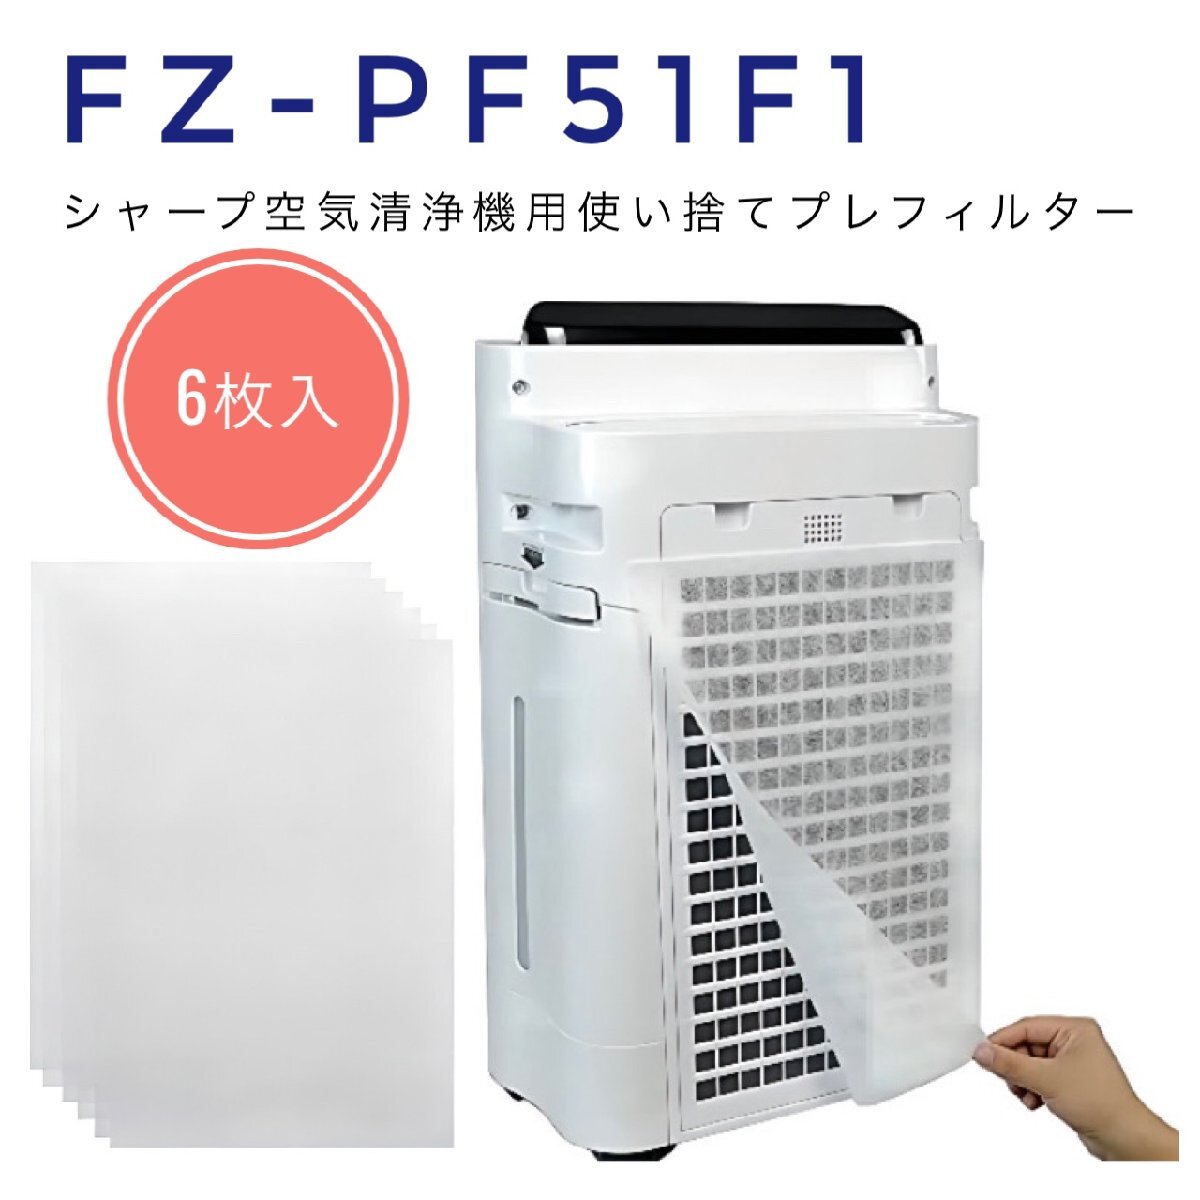 FZ-PF51F1 シャープ SHARP 空気清浄機 フィルター 使い捨てプレフィルター 互換品 fzpf51f1 使い捨て 貼り付け用 6枚入_画像1